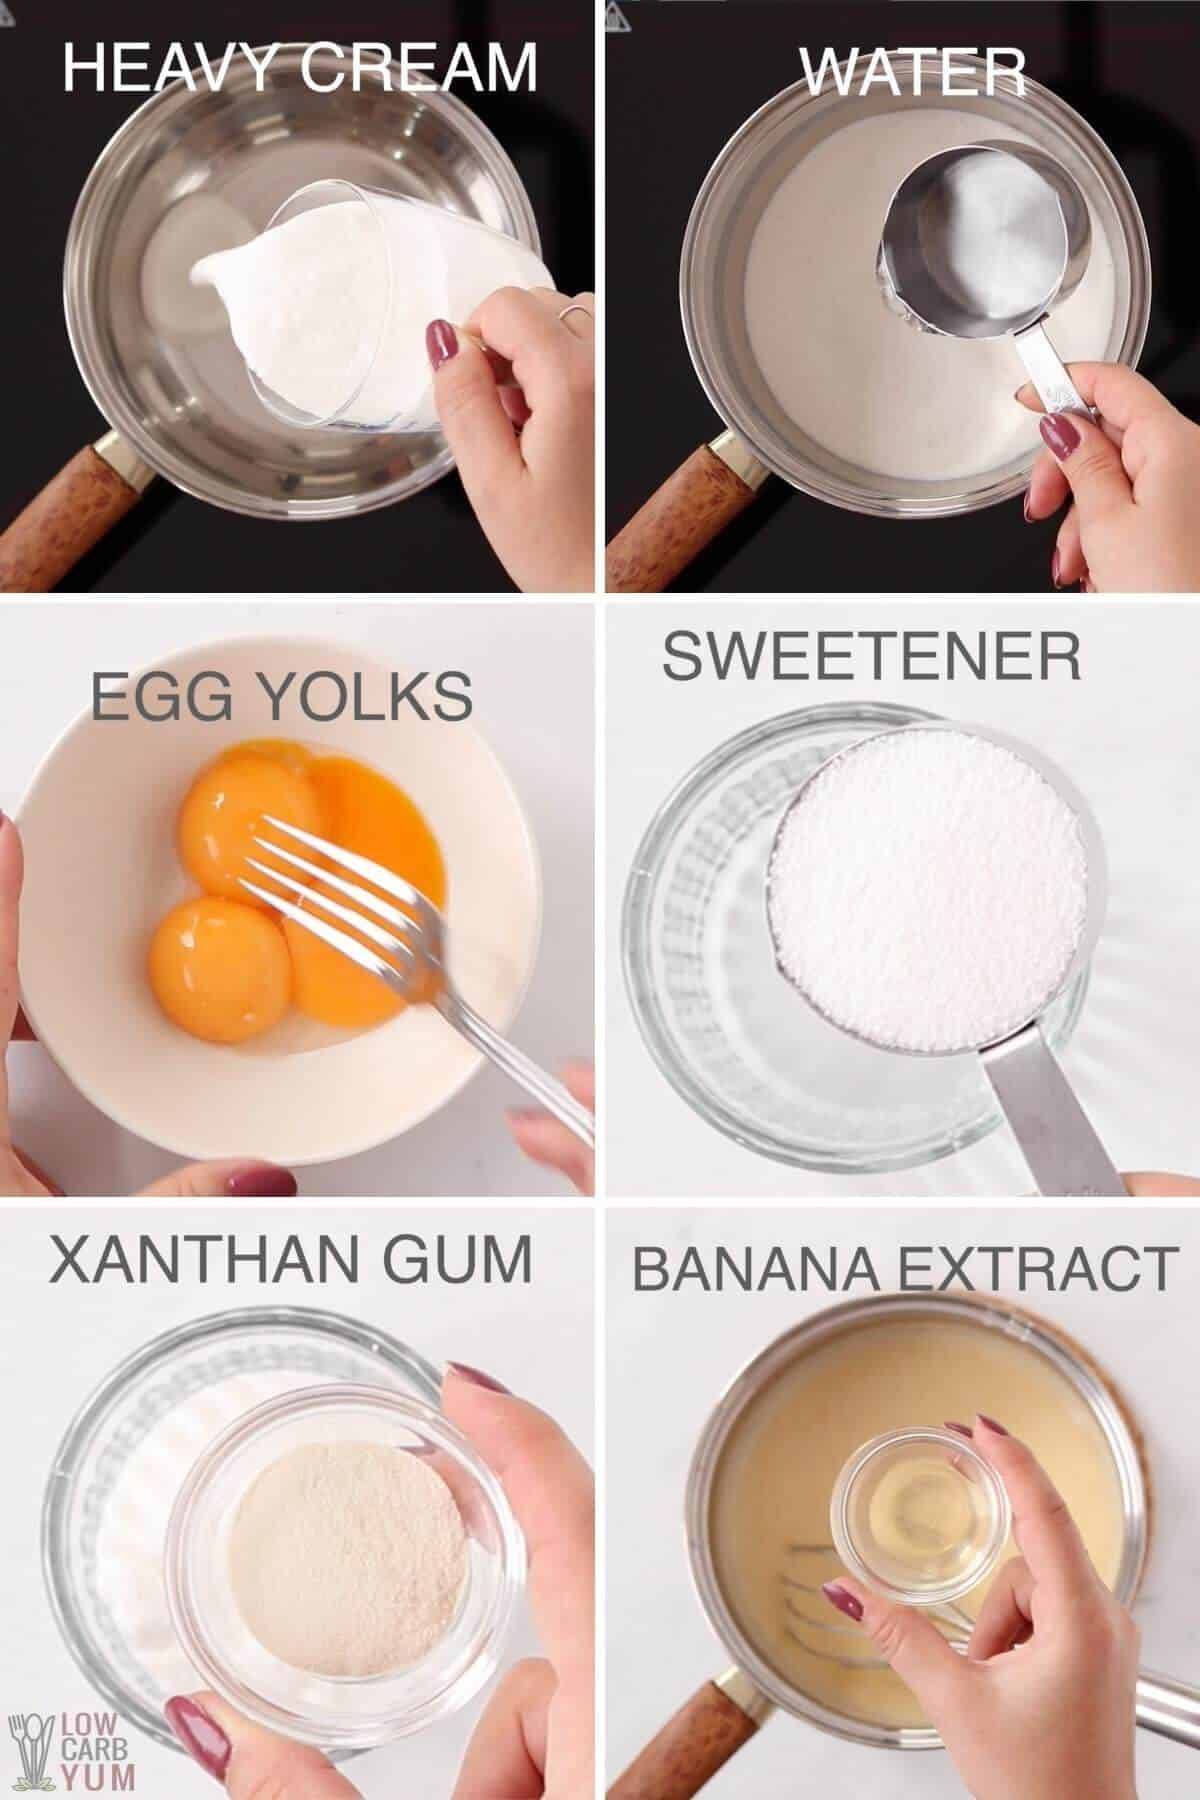 keto banana pudding ingredients